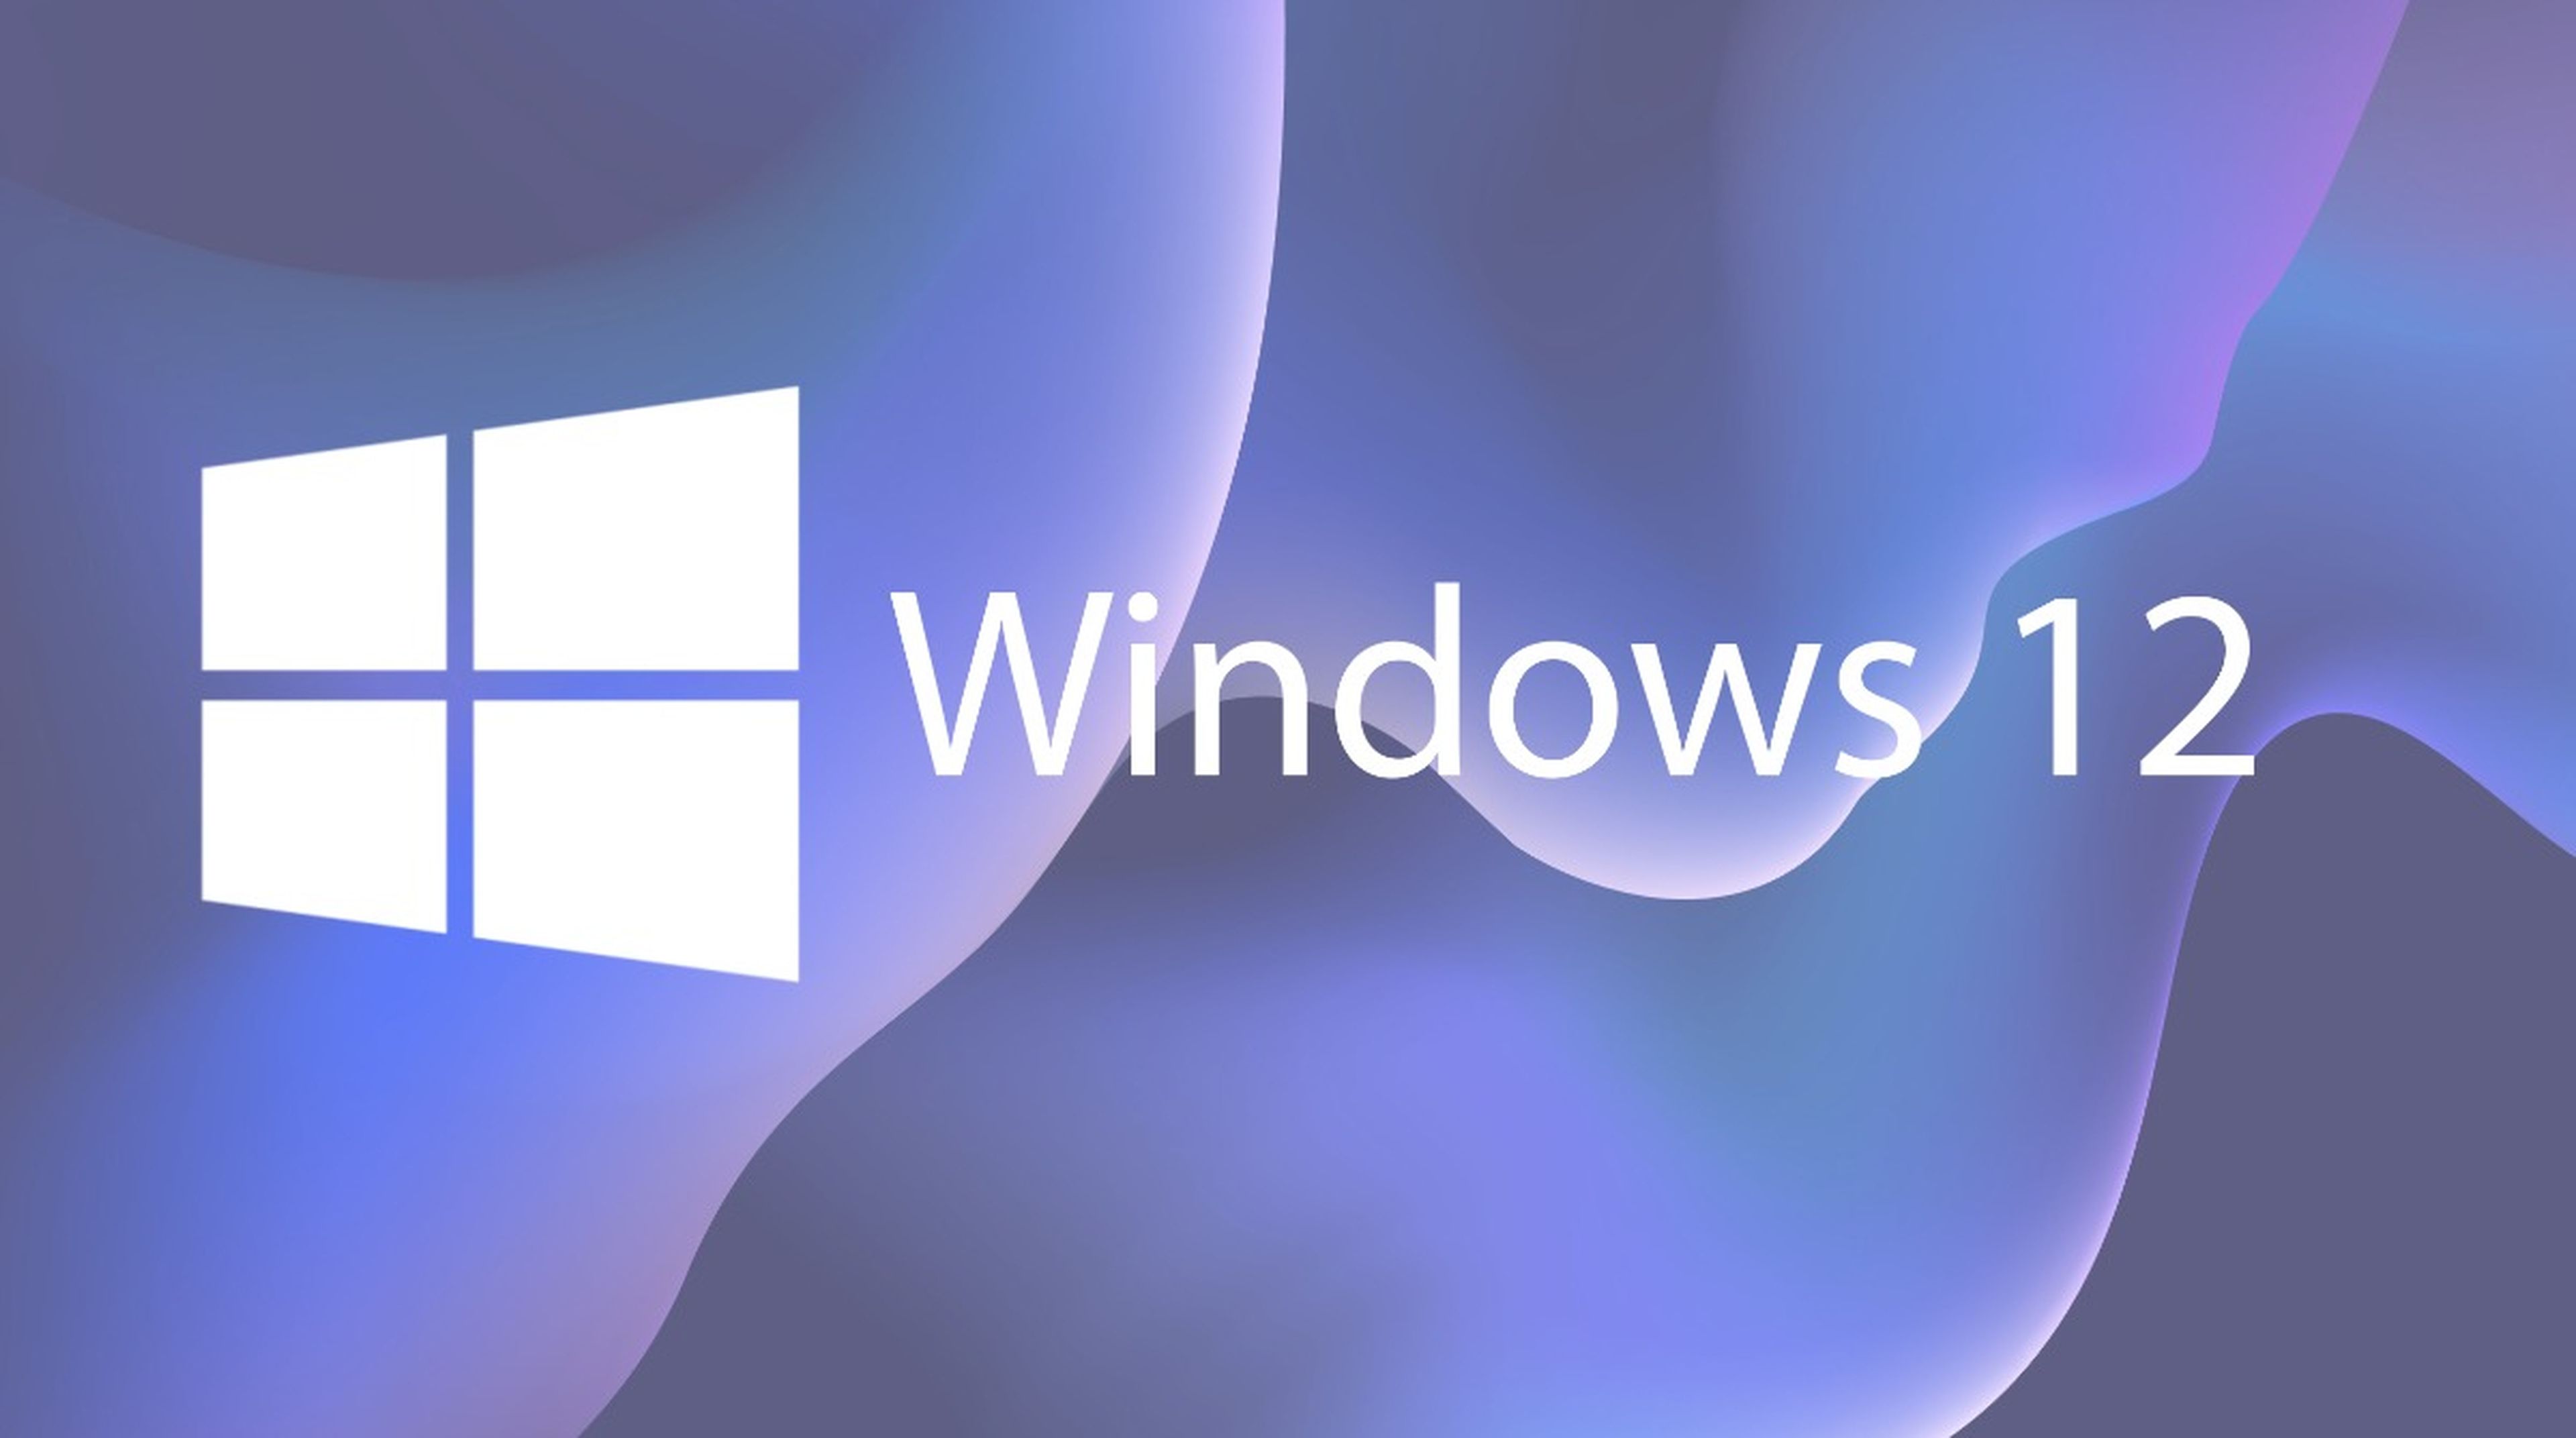 Windows 12 serÃ¡ el sistema operativo mÃ¡s top gracias a la integraciÃ³n de inteligencia artificial